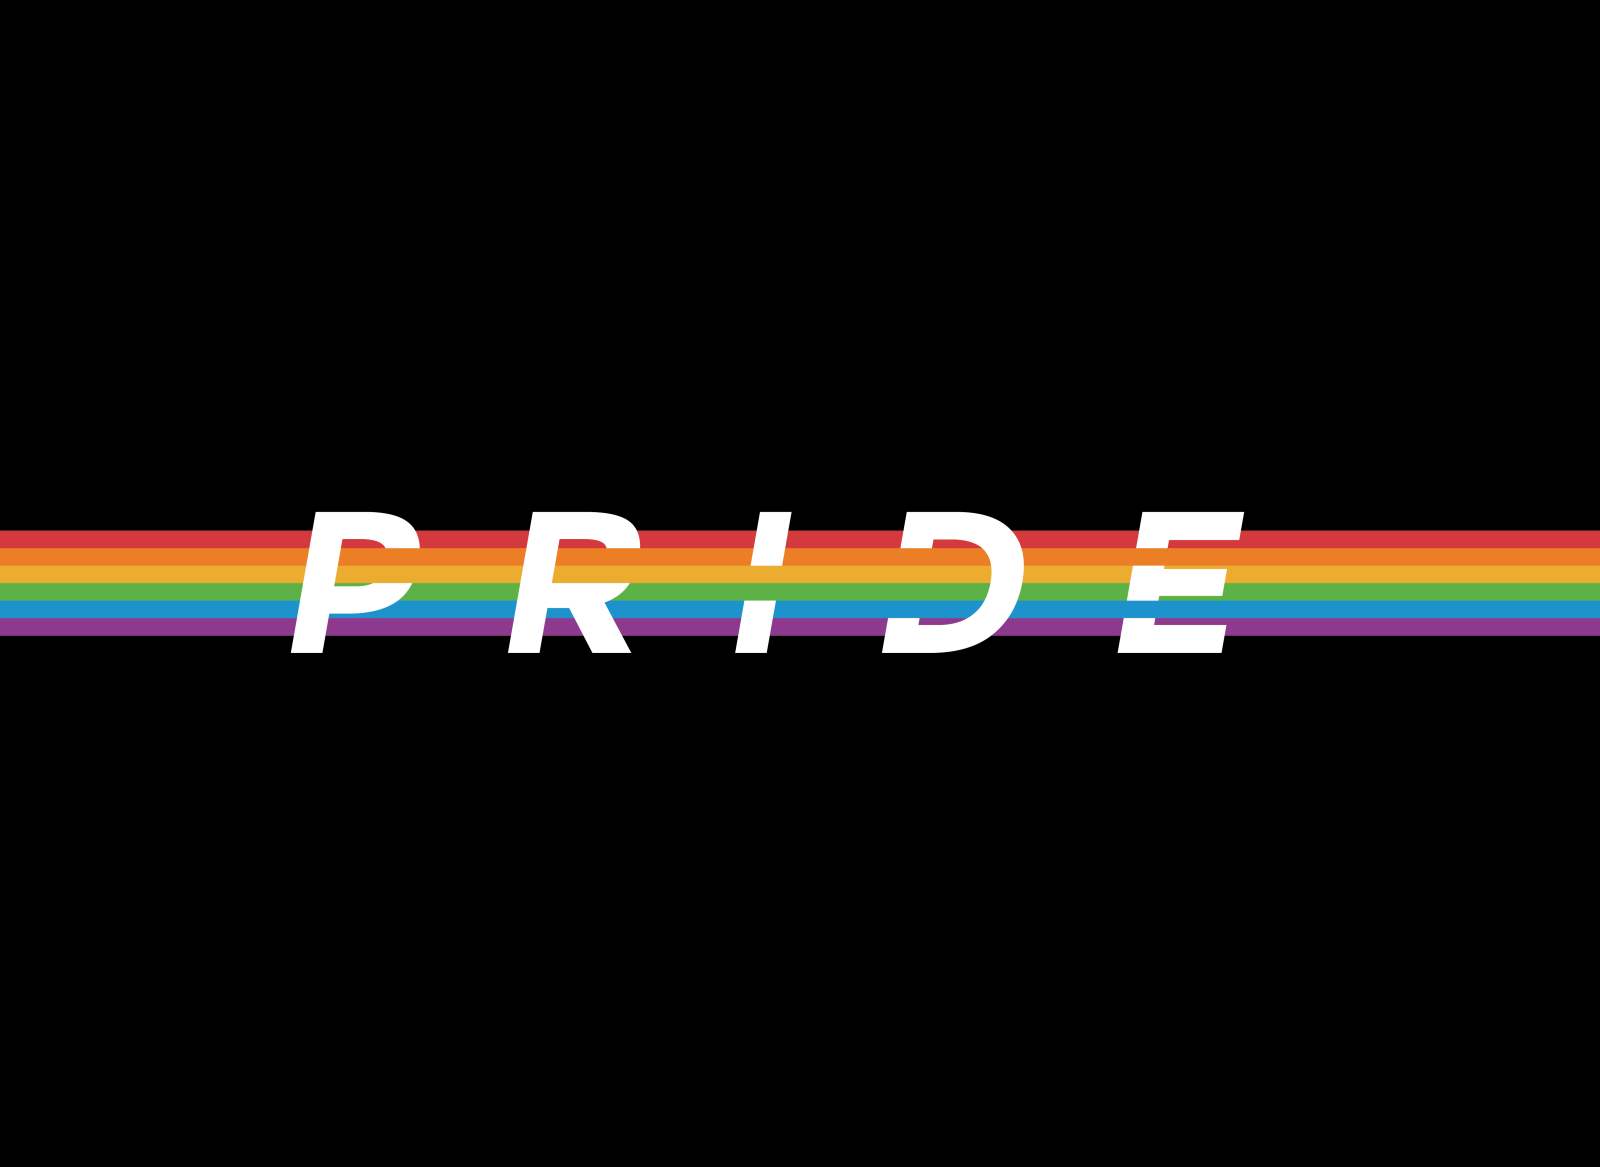 Pride Wallpapers